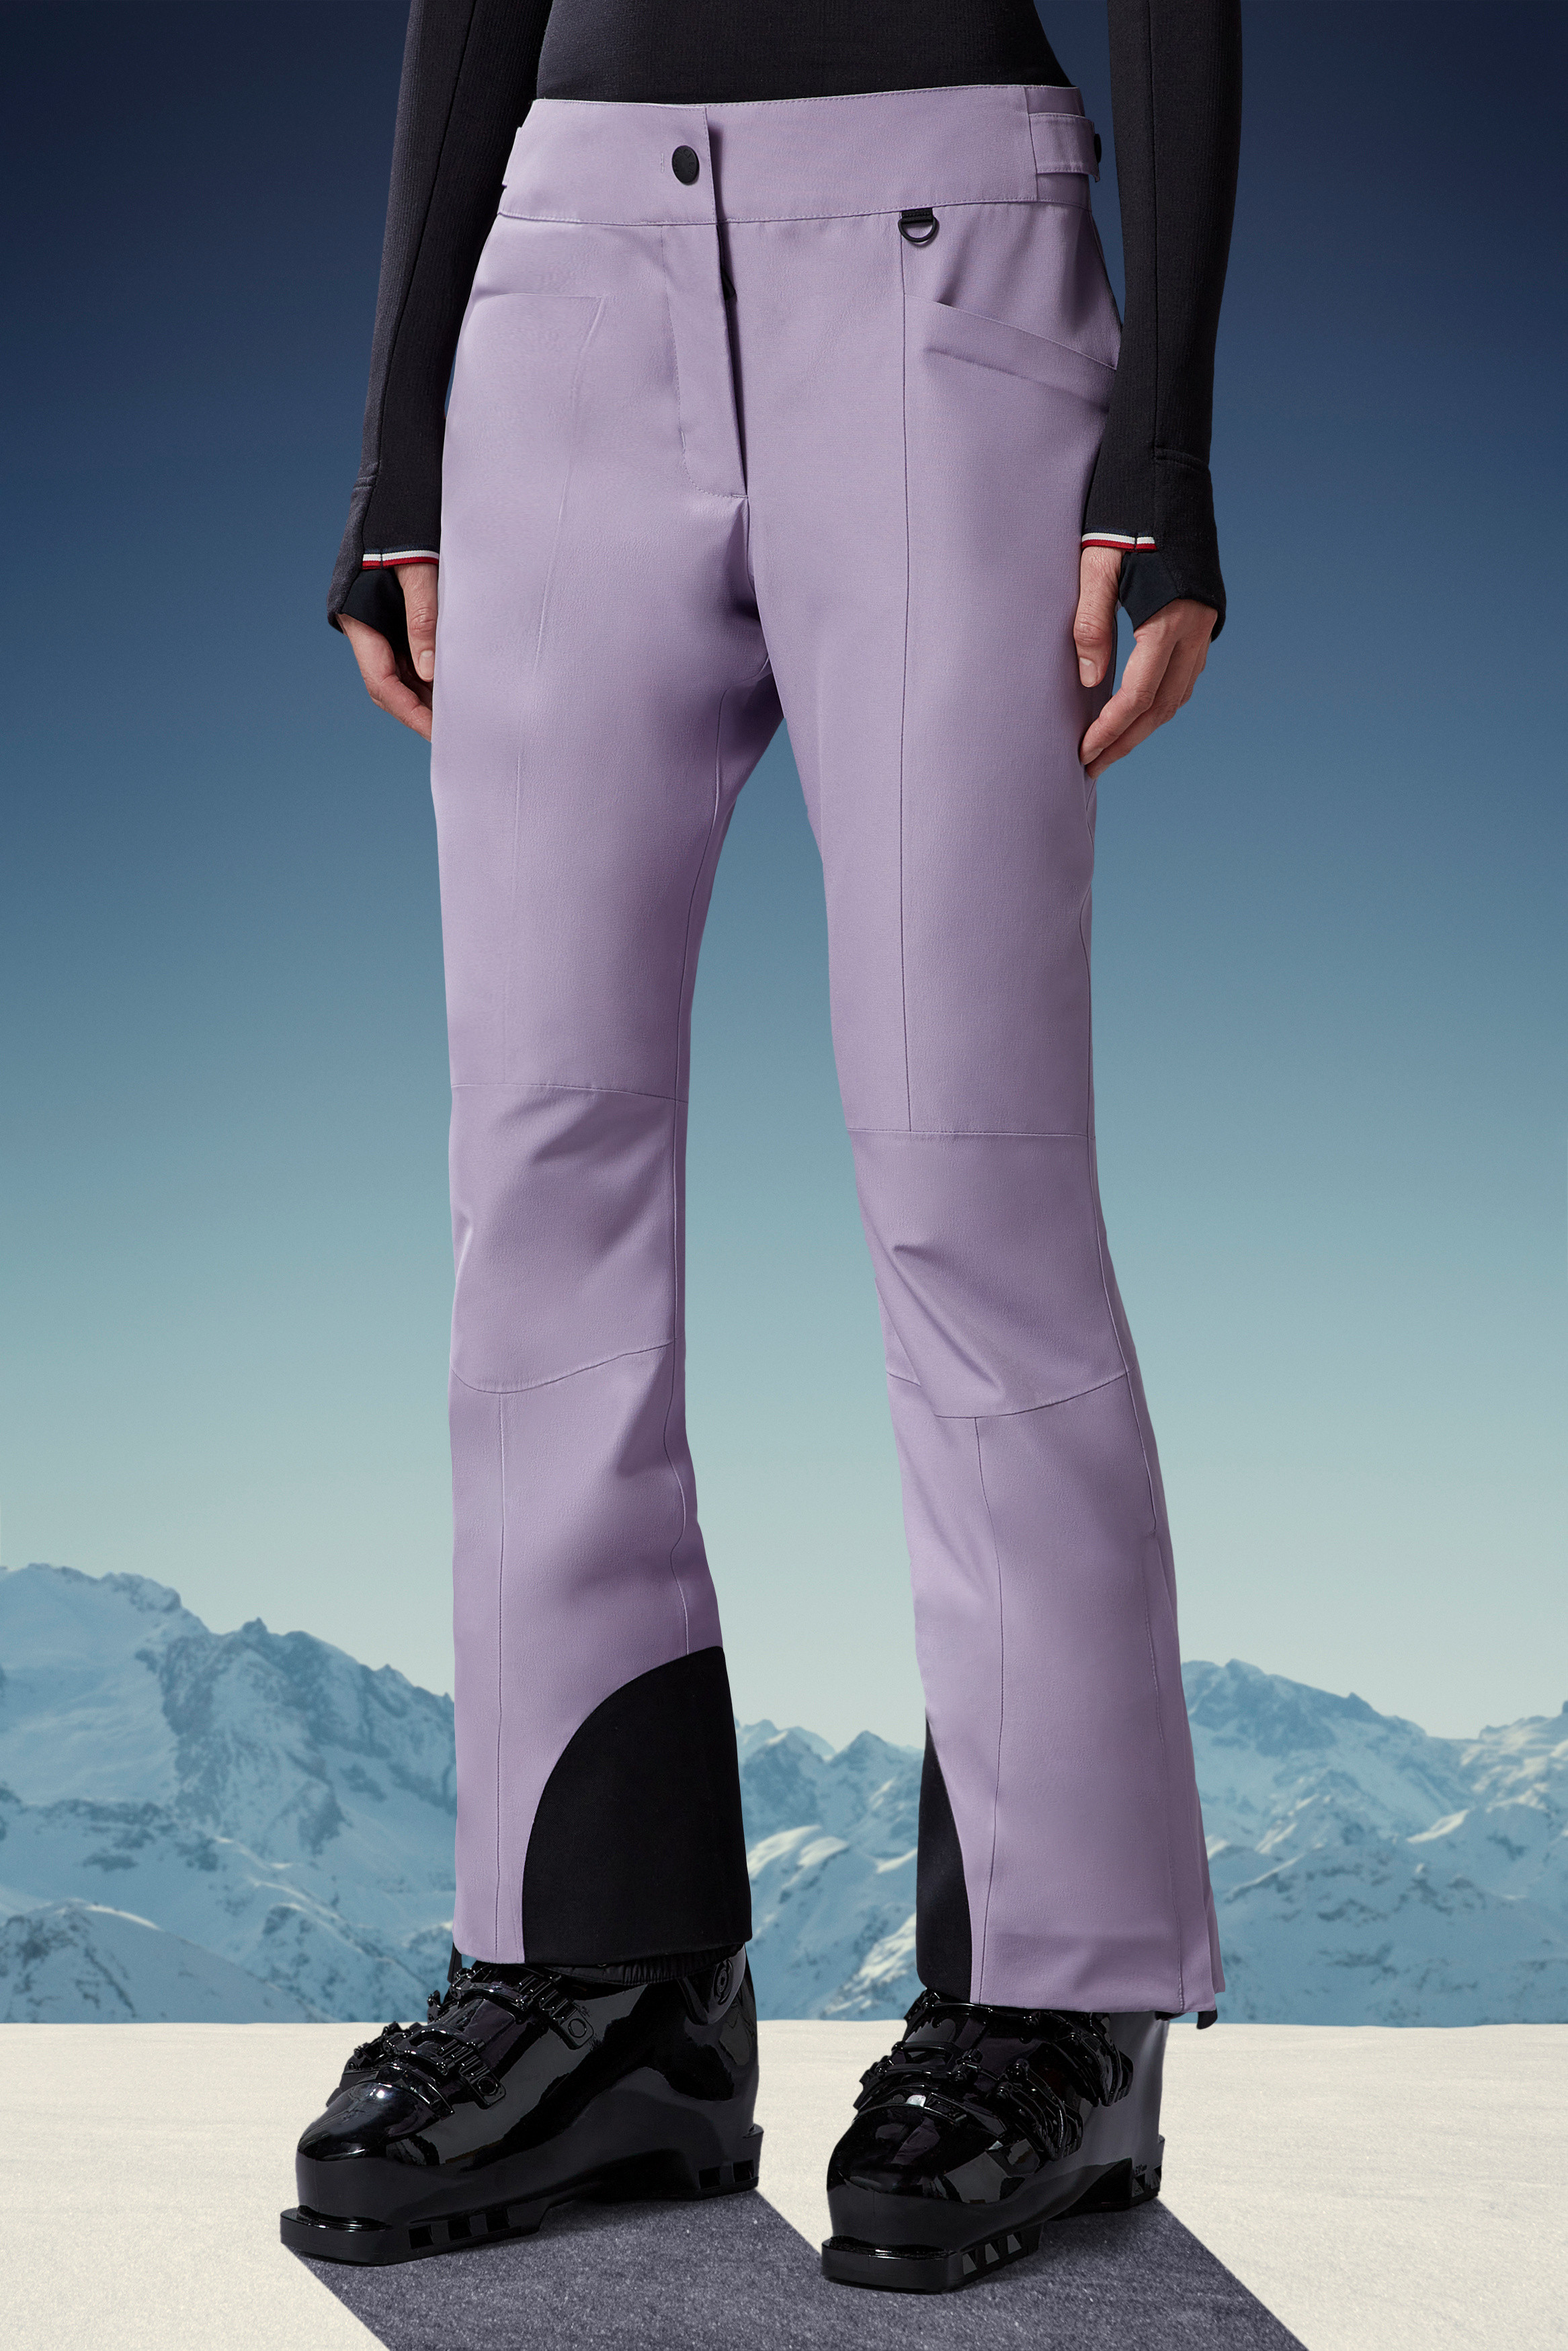 Moncler Alpine and black spandex disco pants 